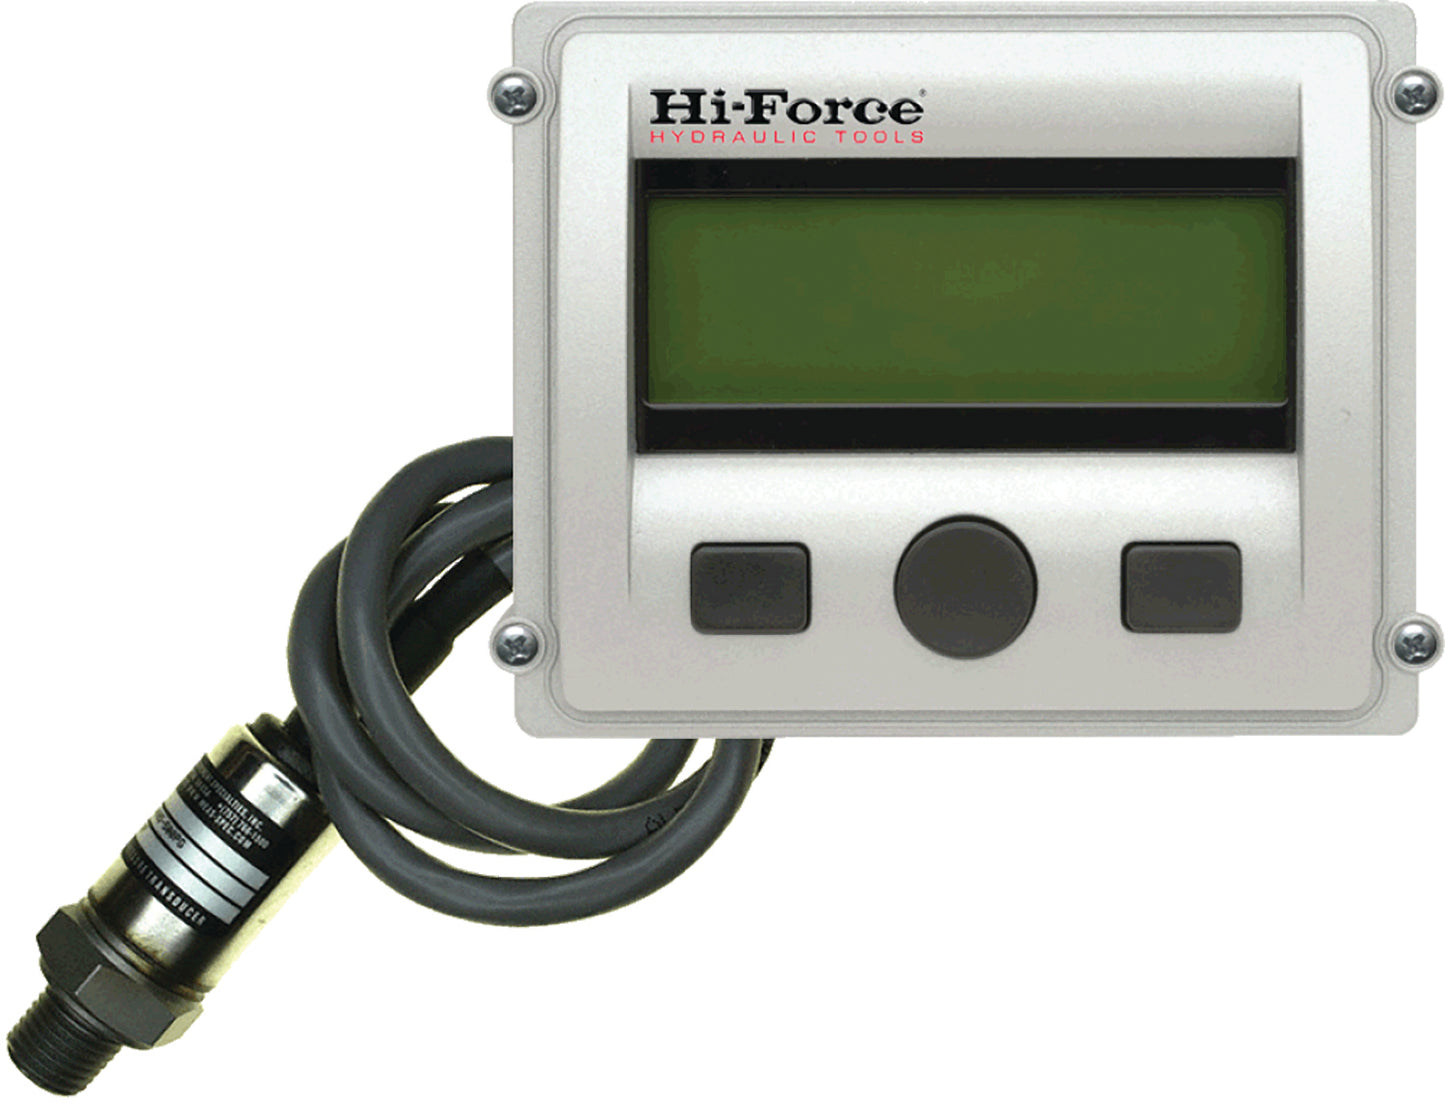 HPT Pressure Transducer & HDD Digital Display